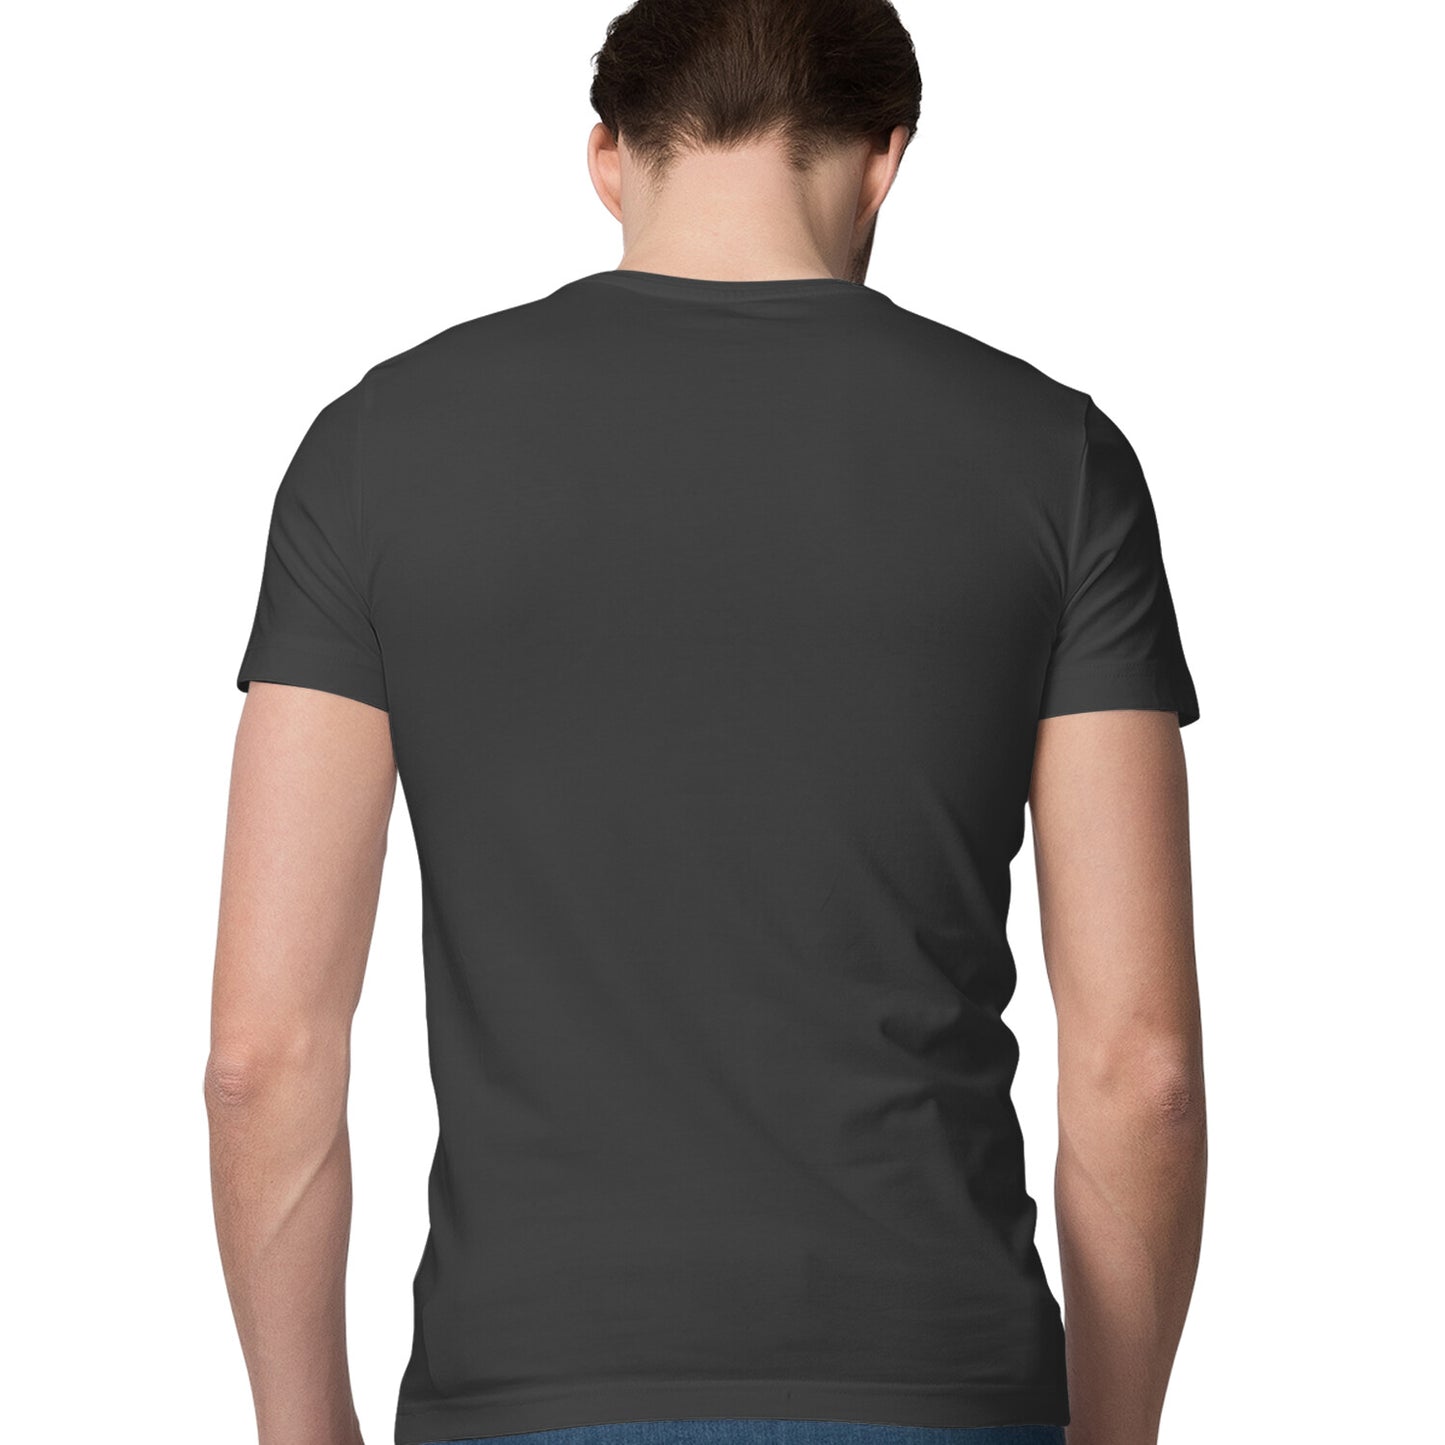 Ready for Gaming - Trendy T-shirt - Men